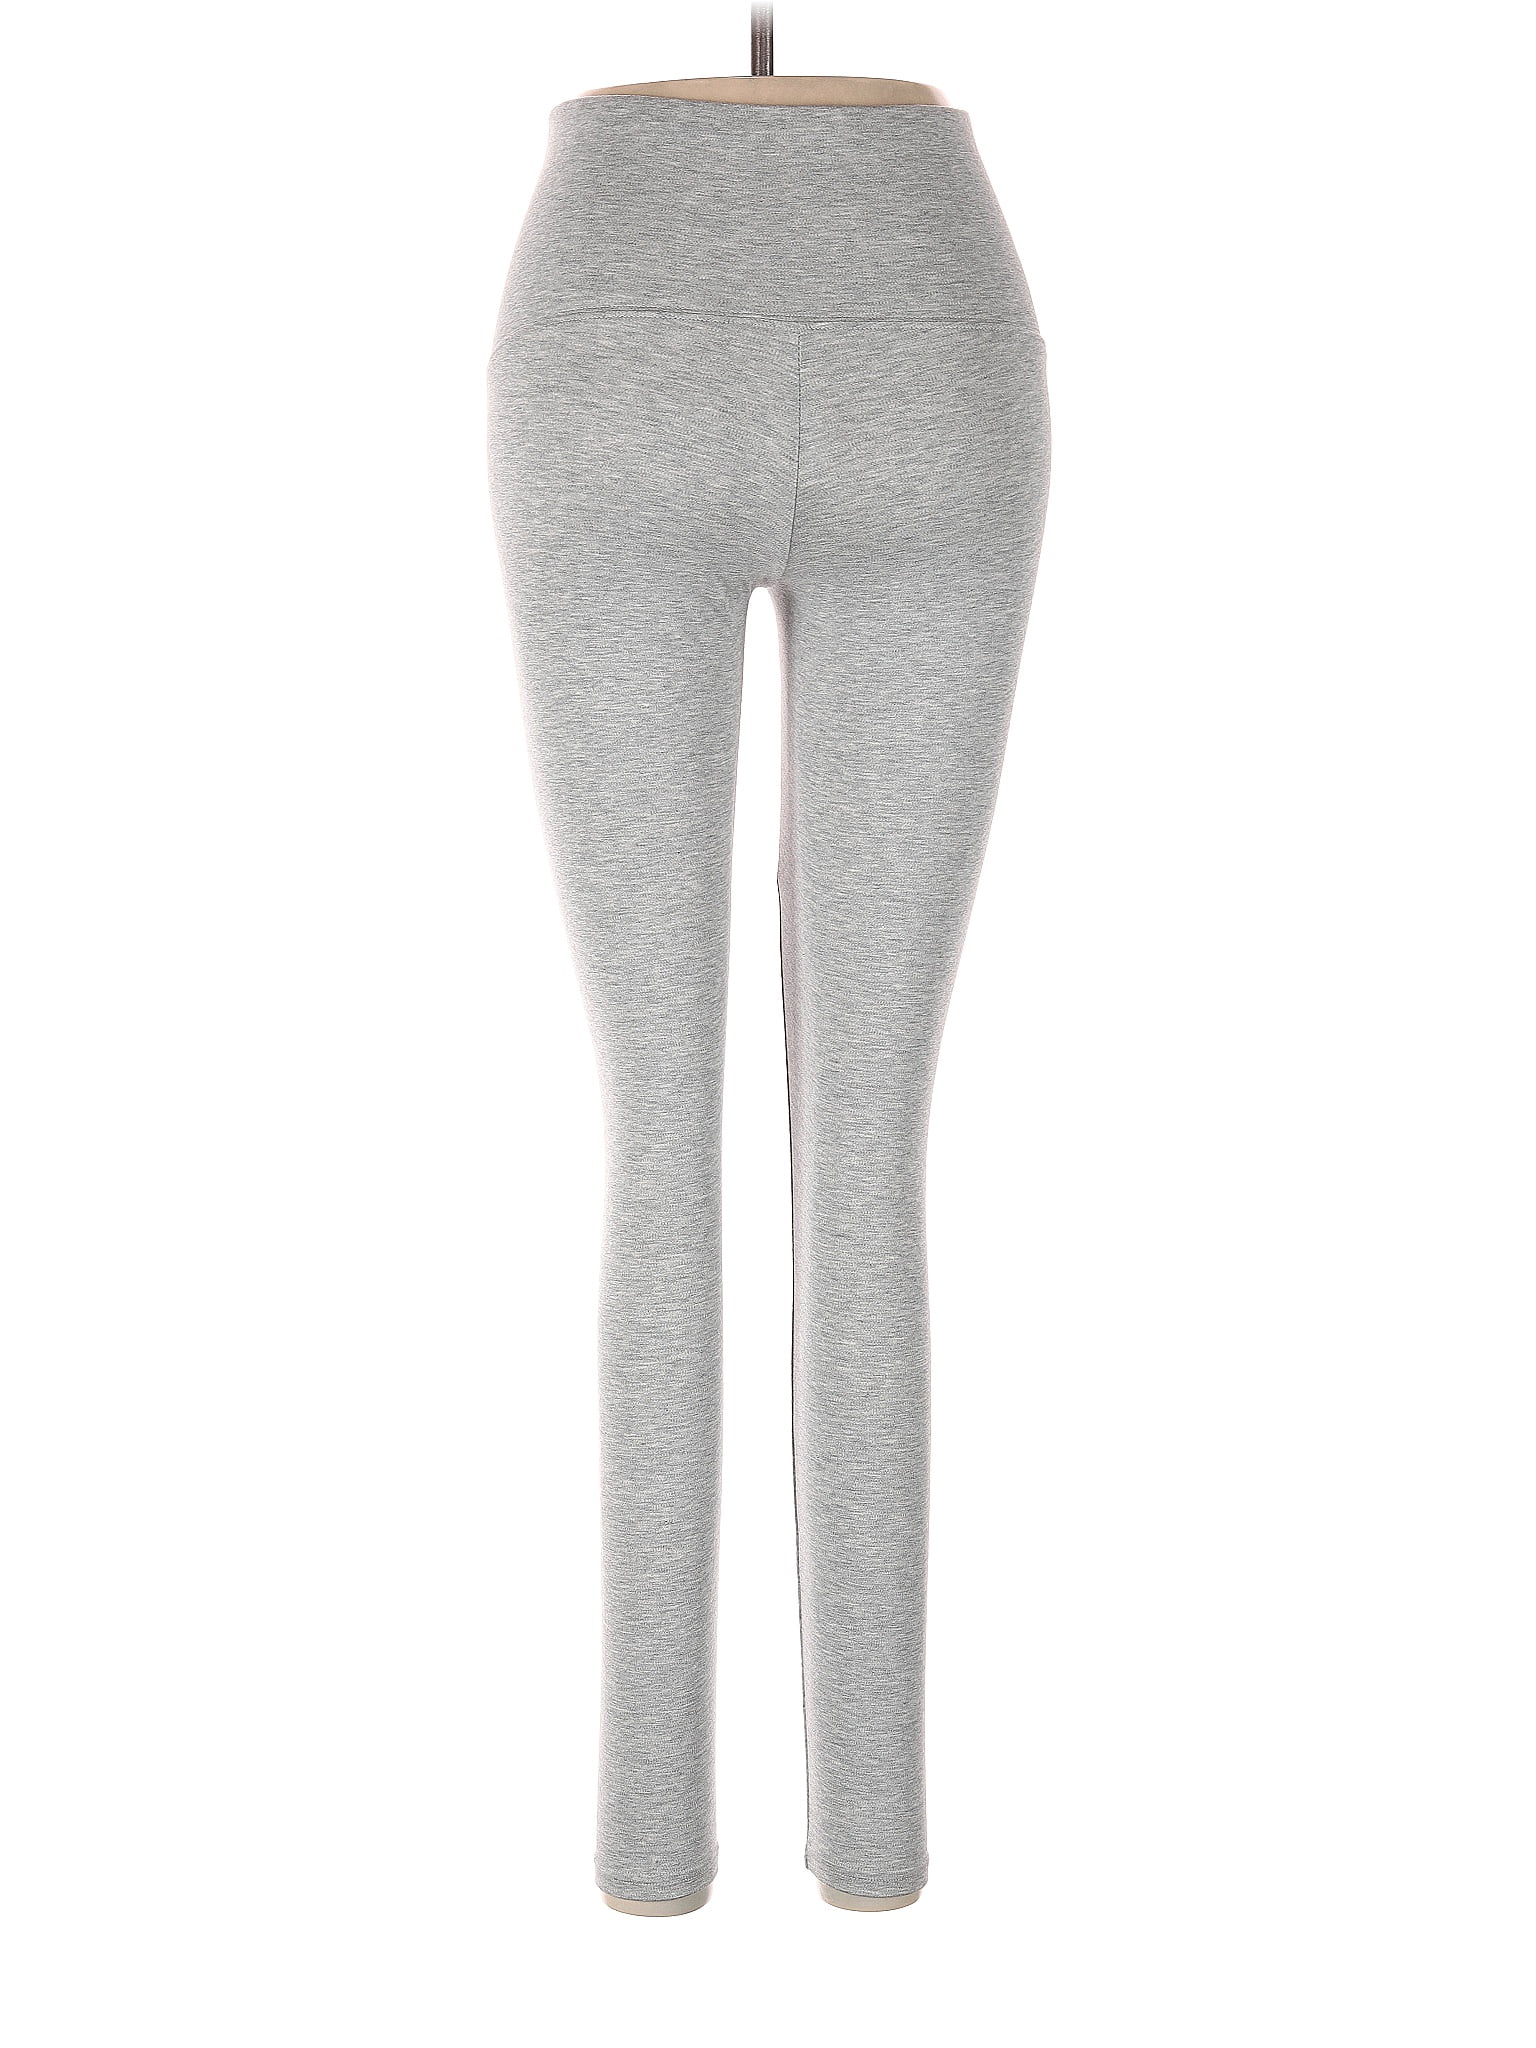 Fabletics Gray Active Pants Size XL - 56% off